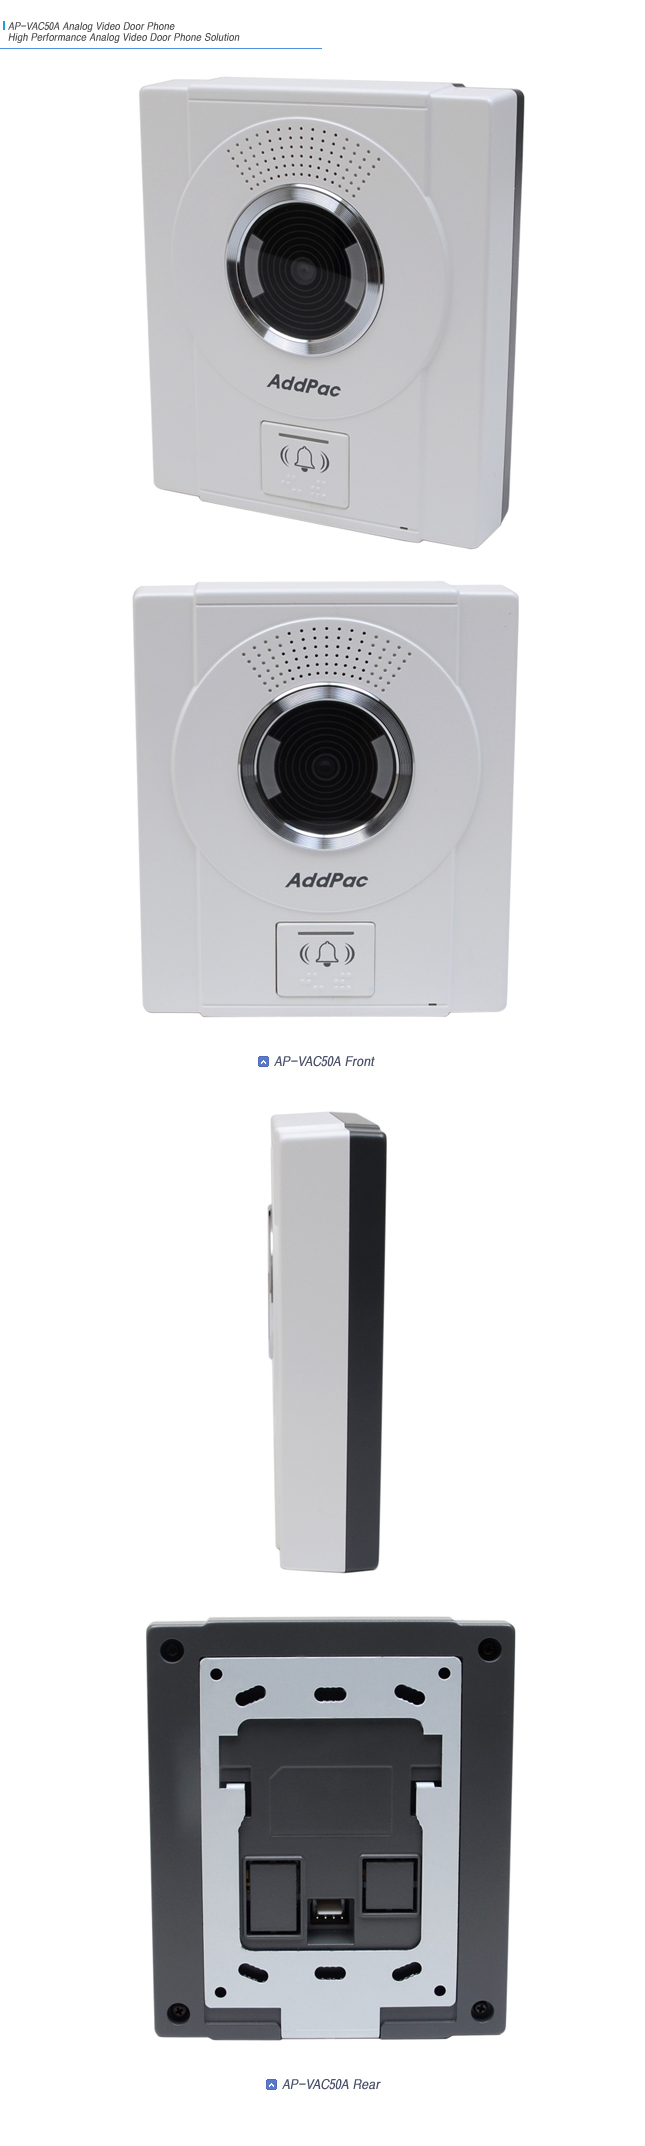 AP-VAC50A Analog Video Door Phone | AddPac